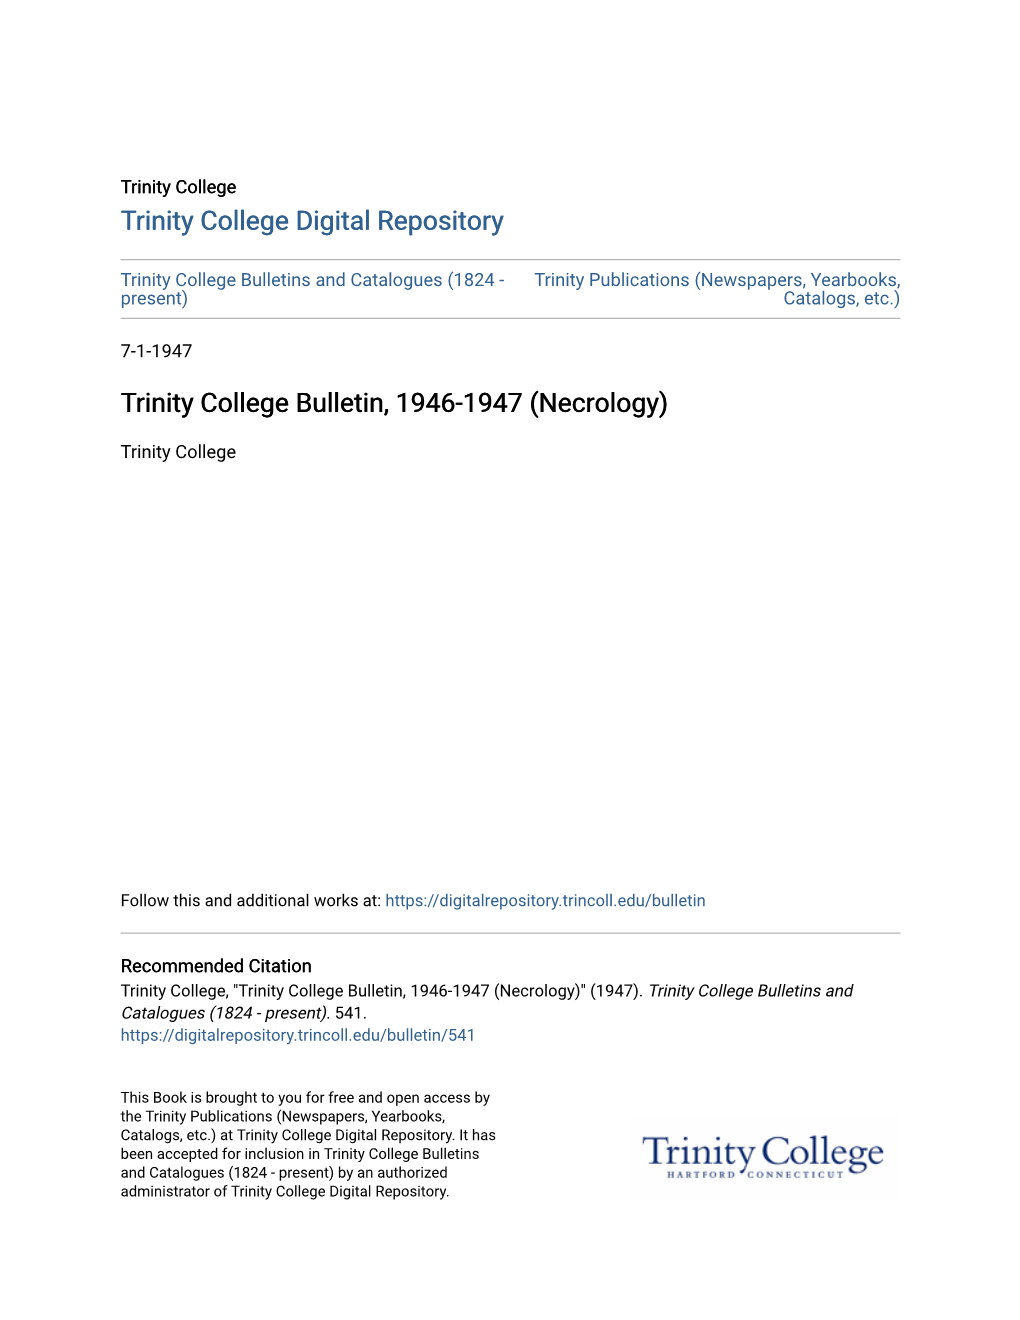 Trinity College Bulletin, 1946-1947 (Necrology)